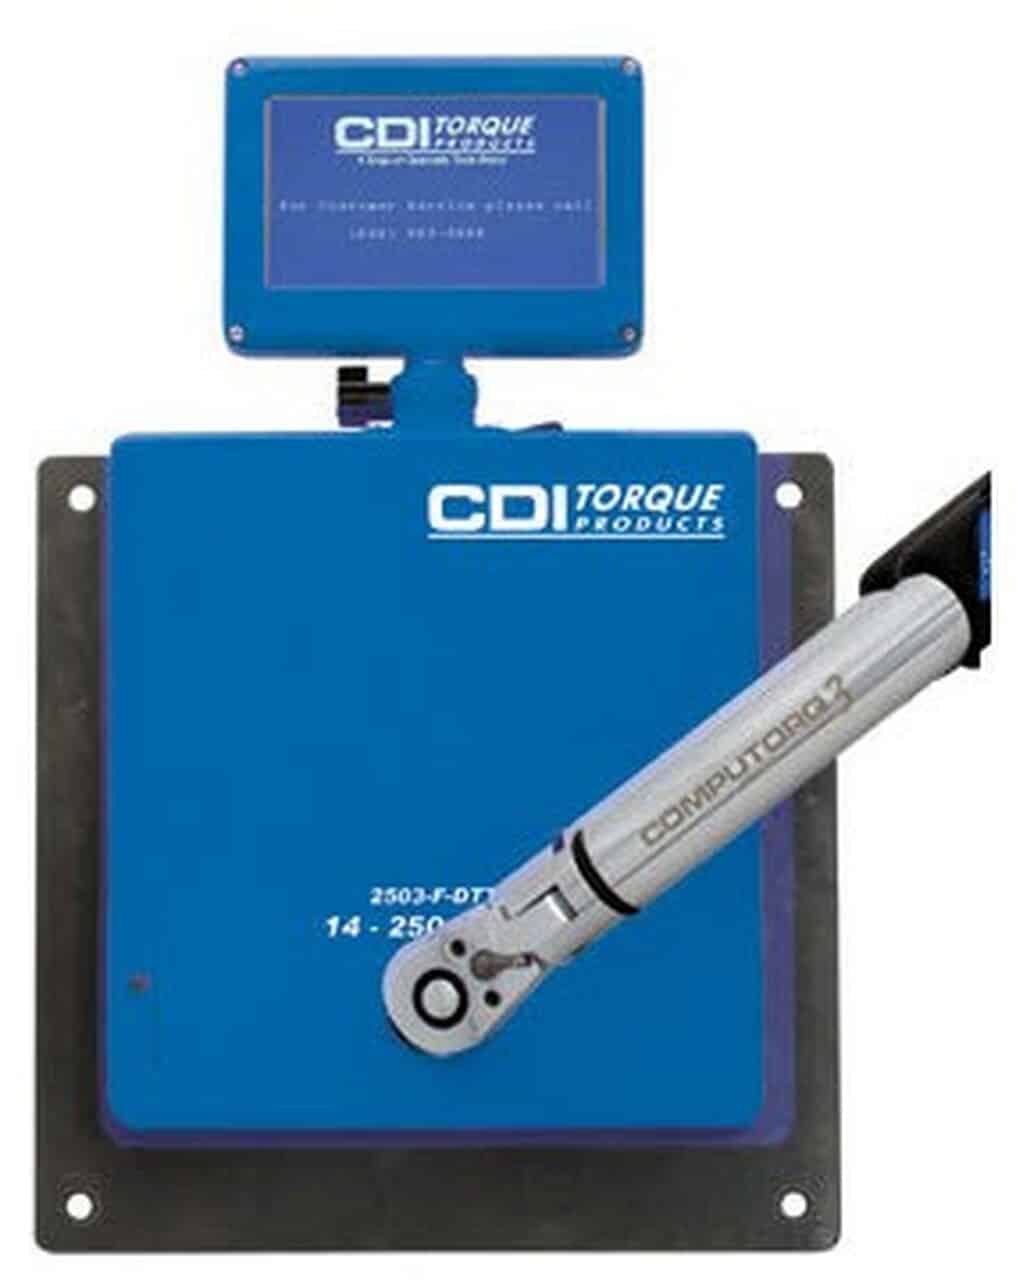 CDI Digital Torque Tester